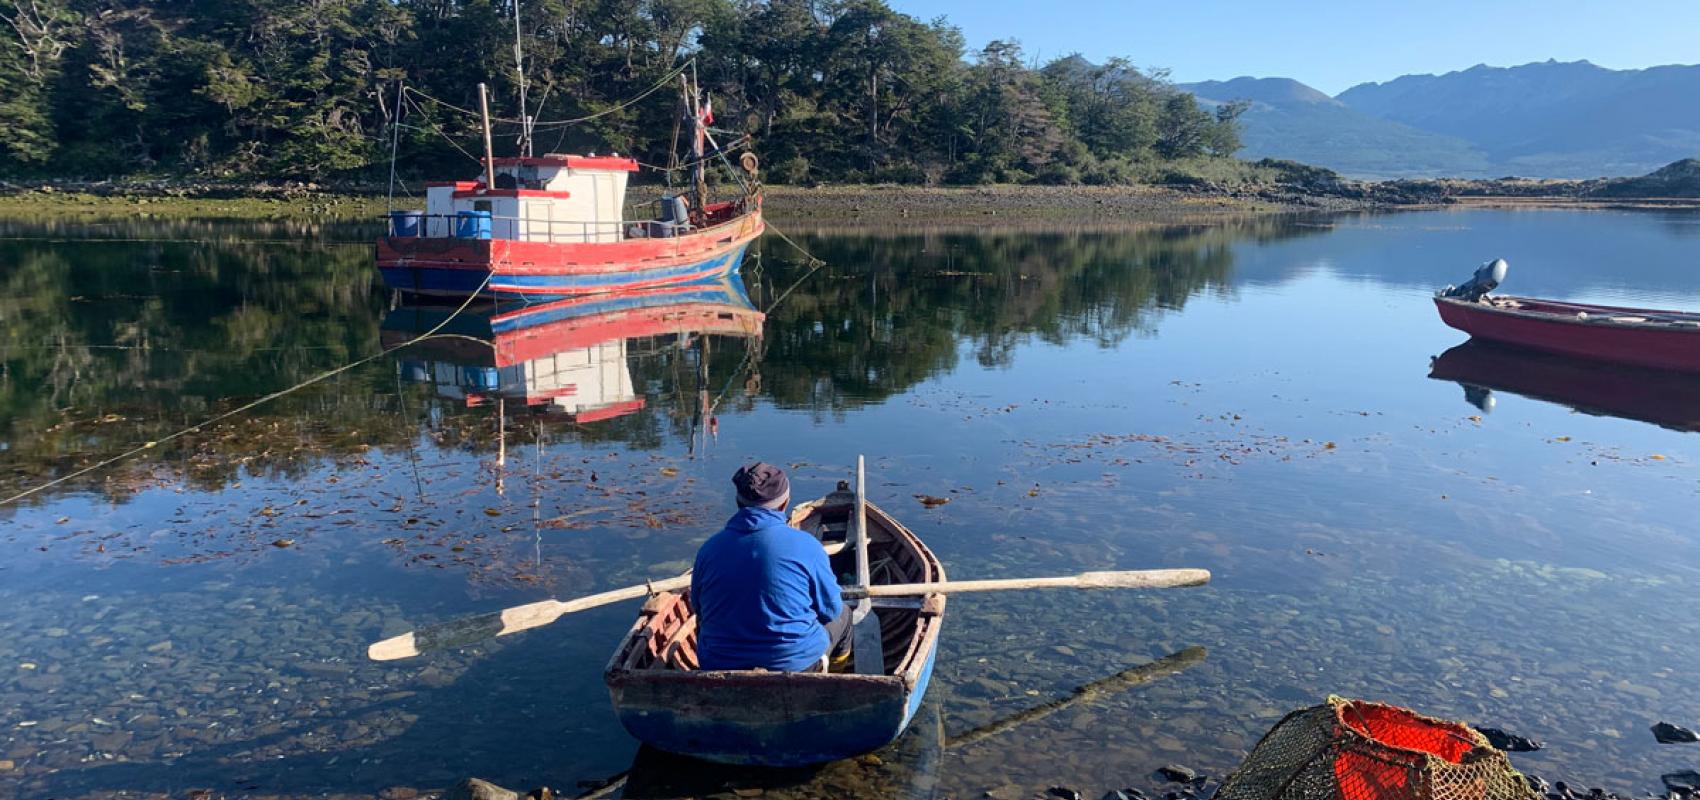 Bateau de pêche artisanal, Île Navarino  (Patagonie chilienne), février 2020 -  - Geremia Cometti